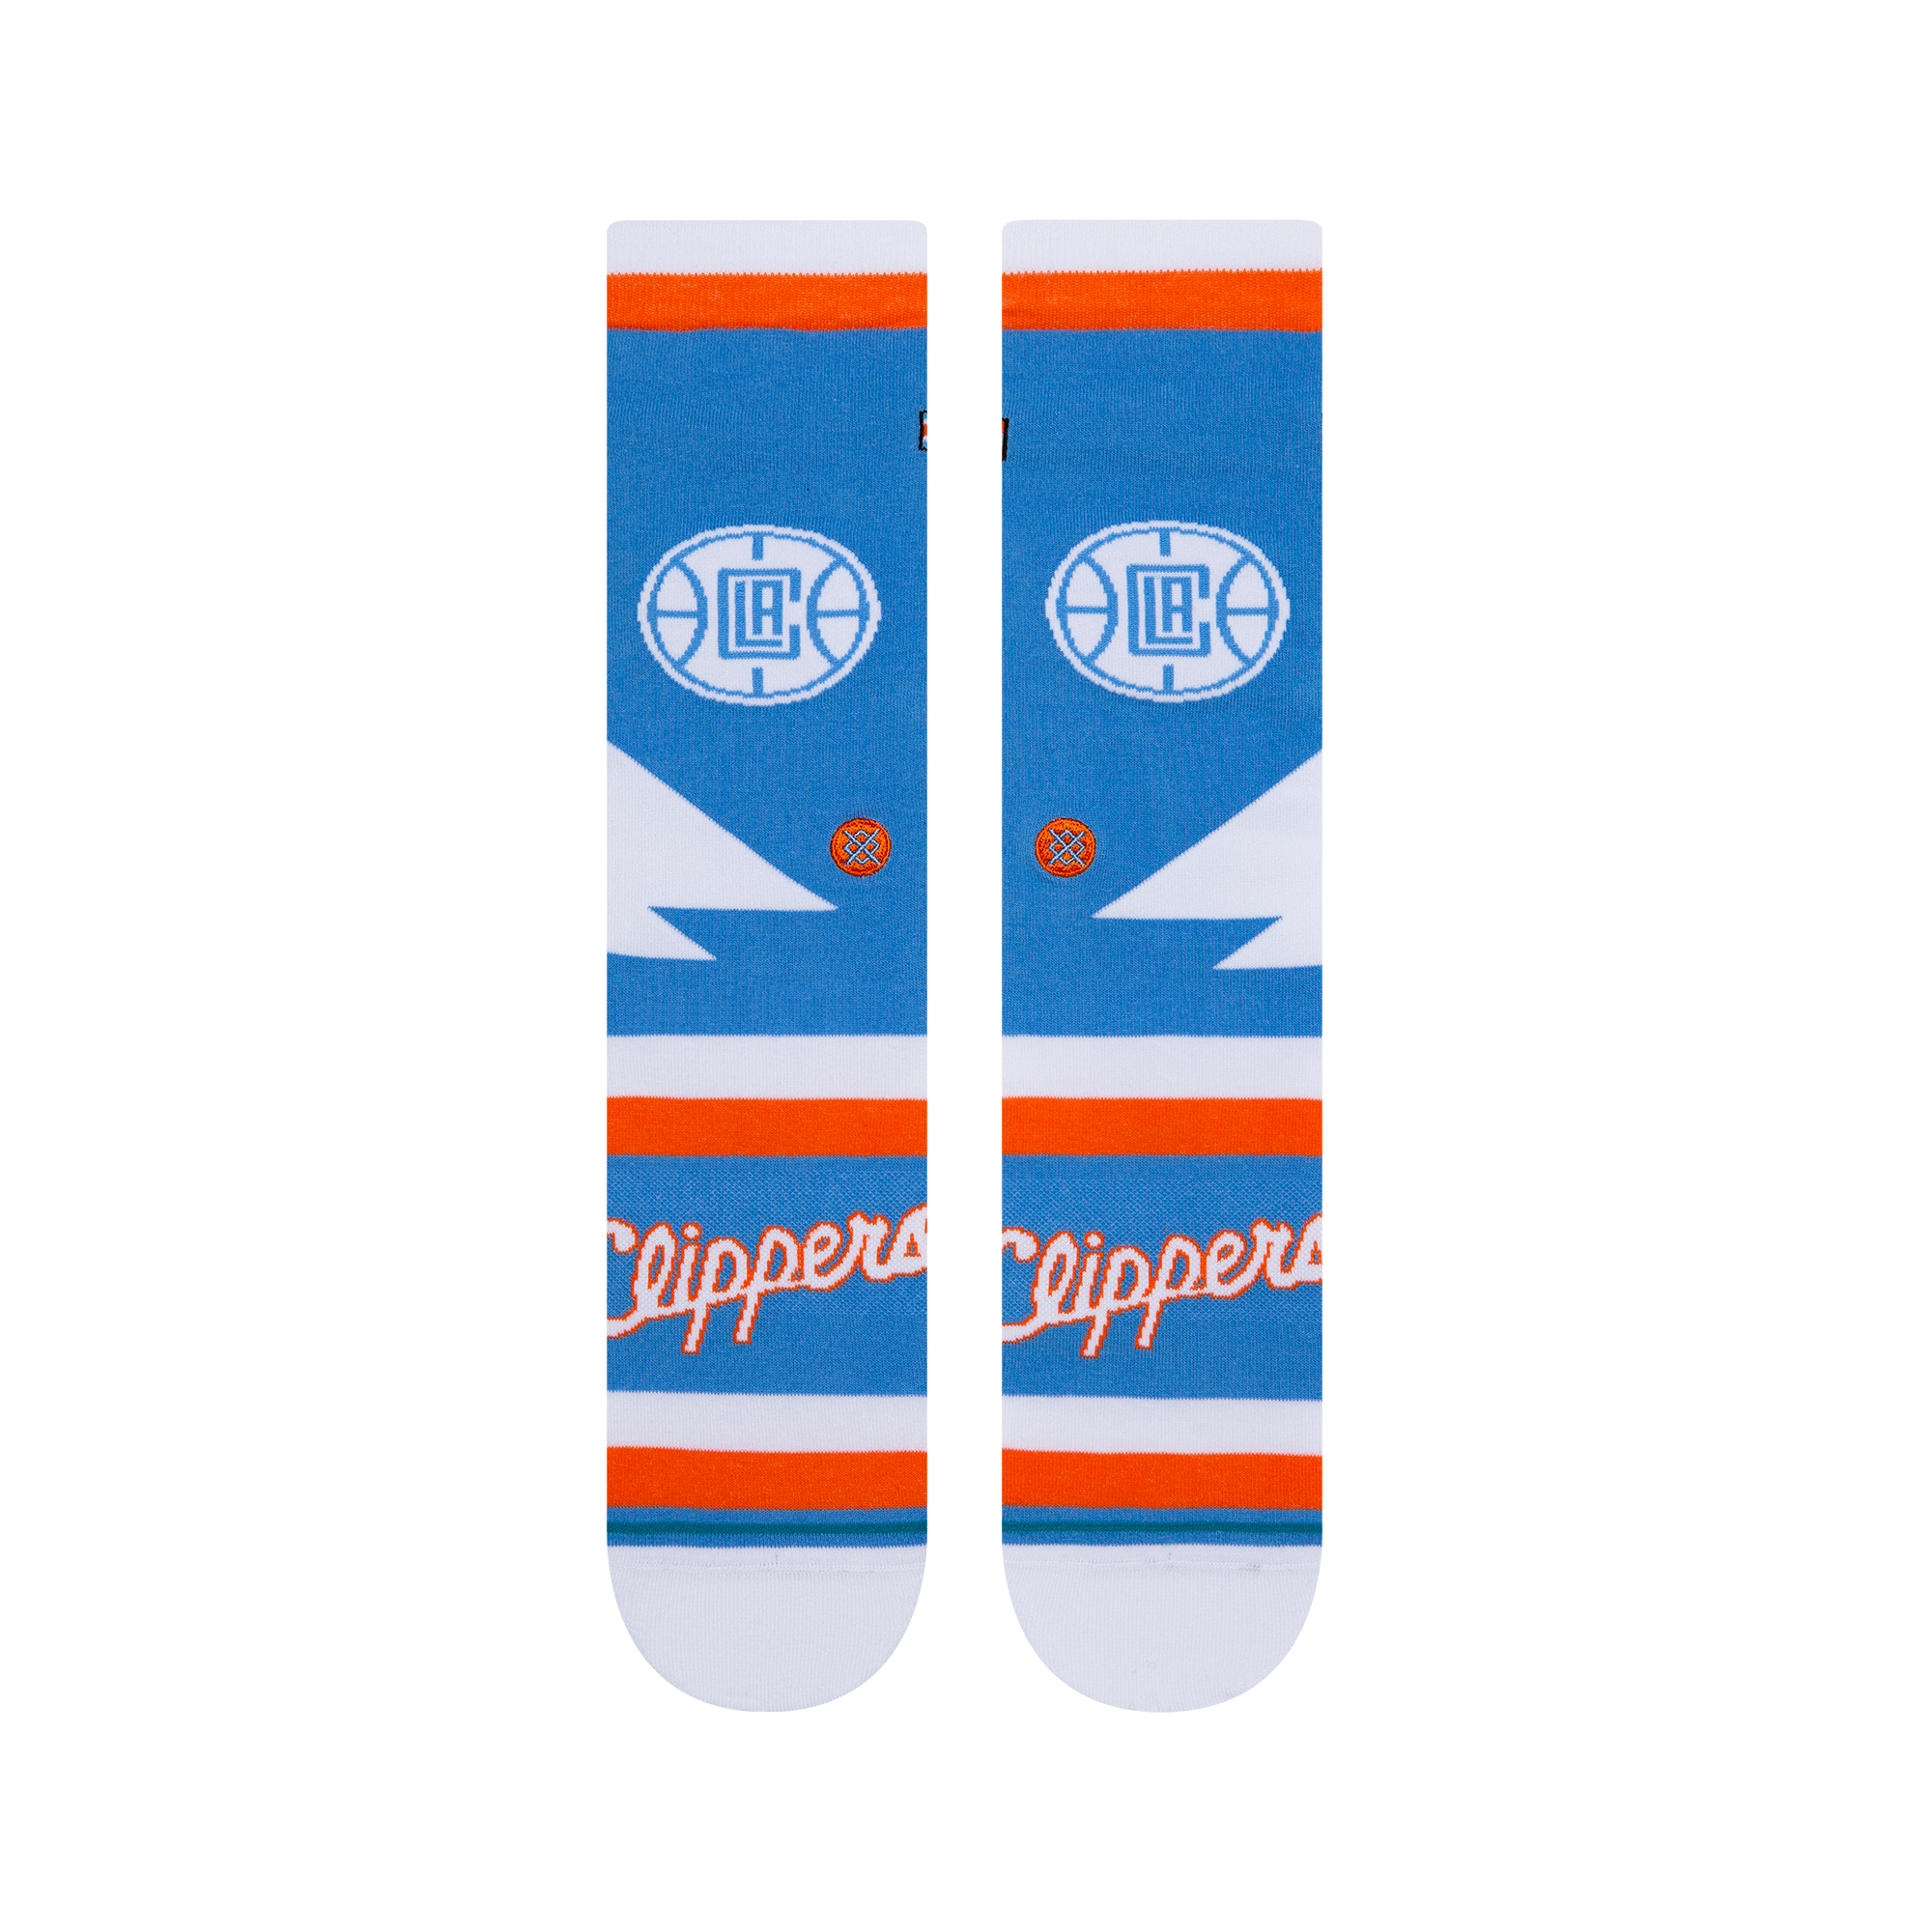 Stance La Clippers Black 2019/20 City Edition Elite Crew Socks Size: Large